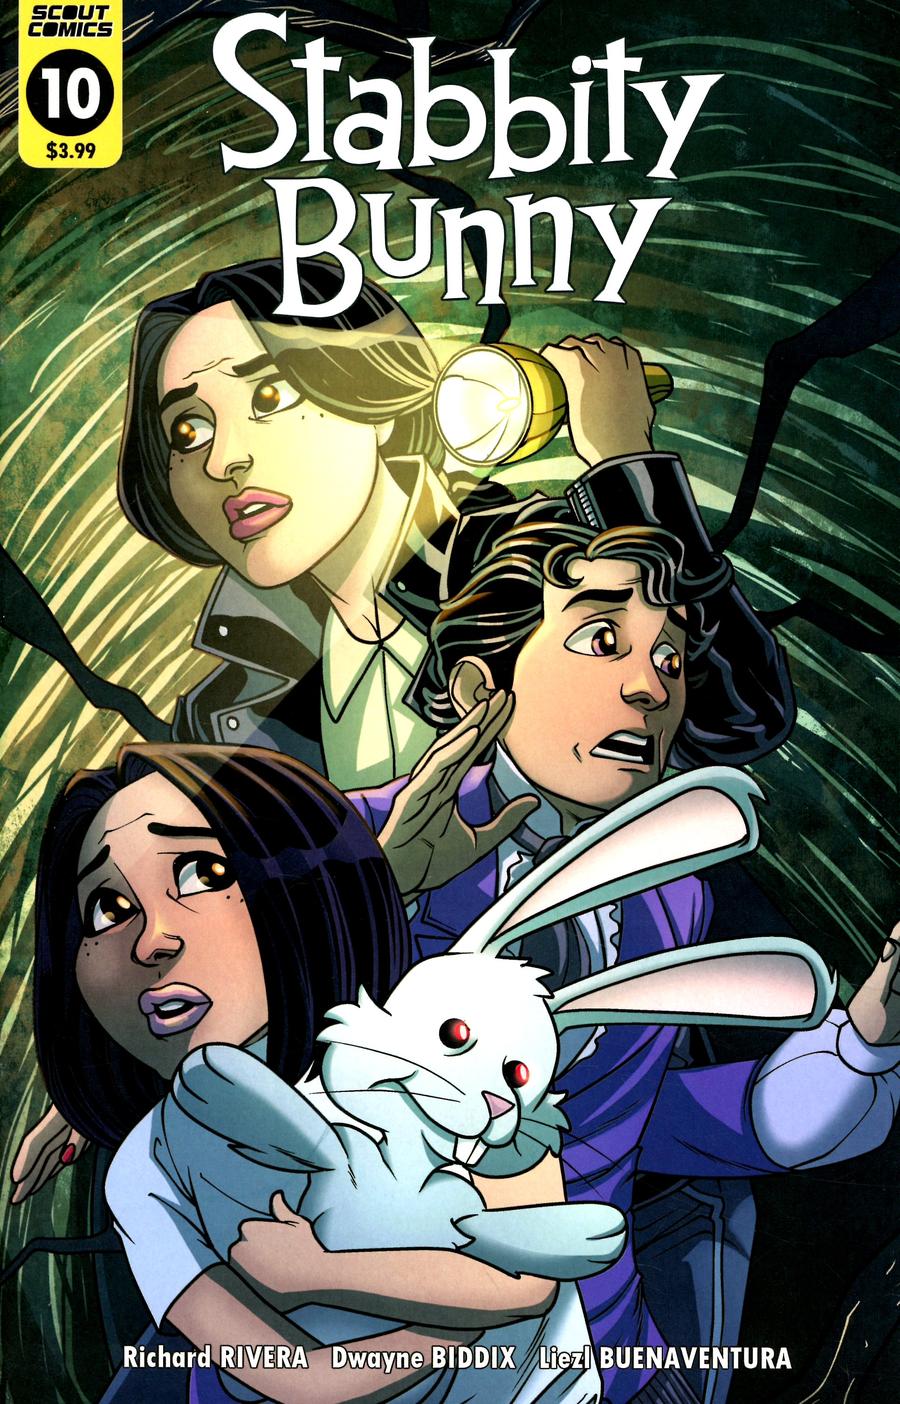 Stabbity Bunny #10